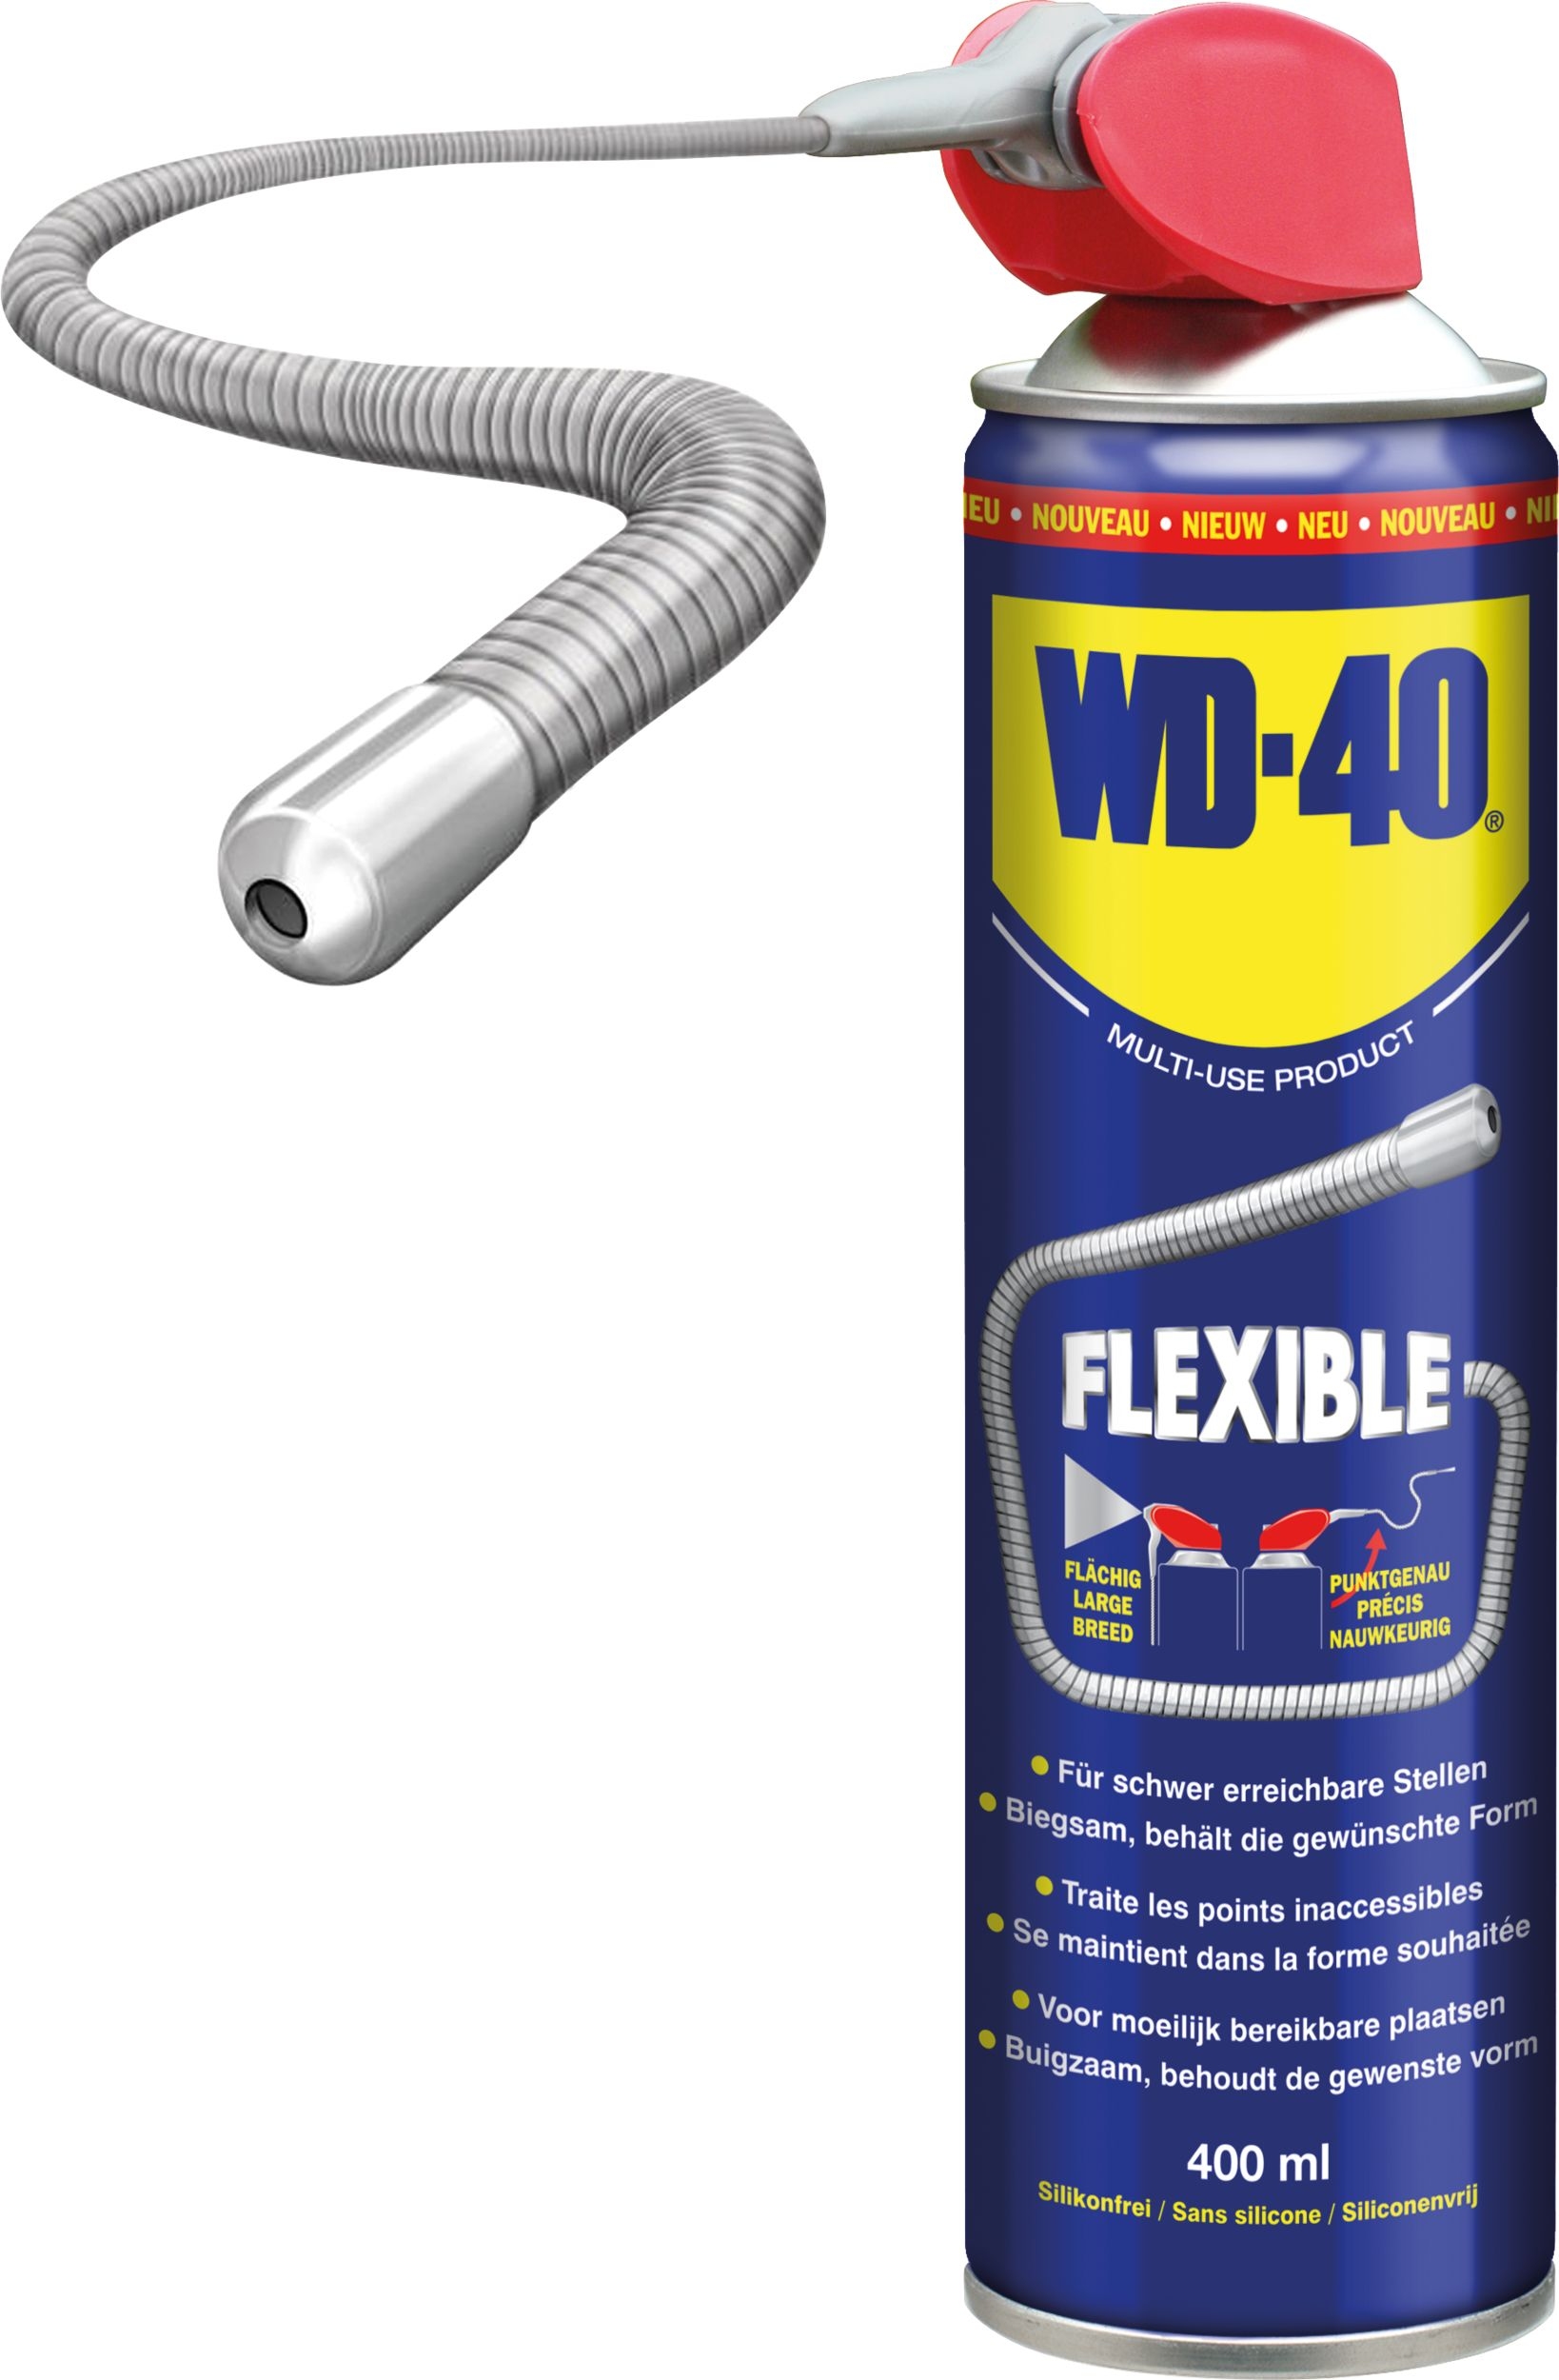 WD40 Multifunktionsspray 400ml mit flexiblem Metallrohr